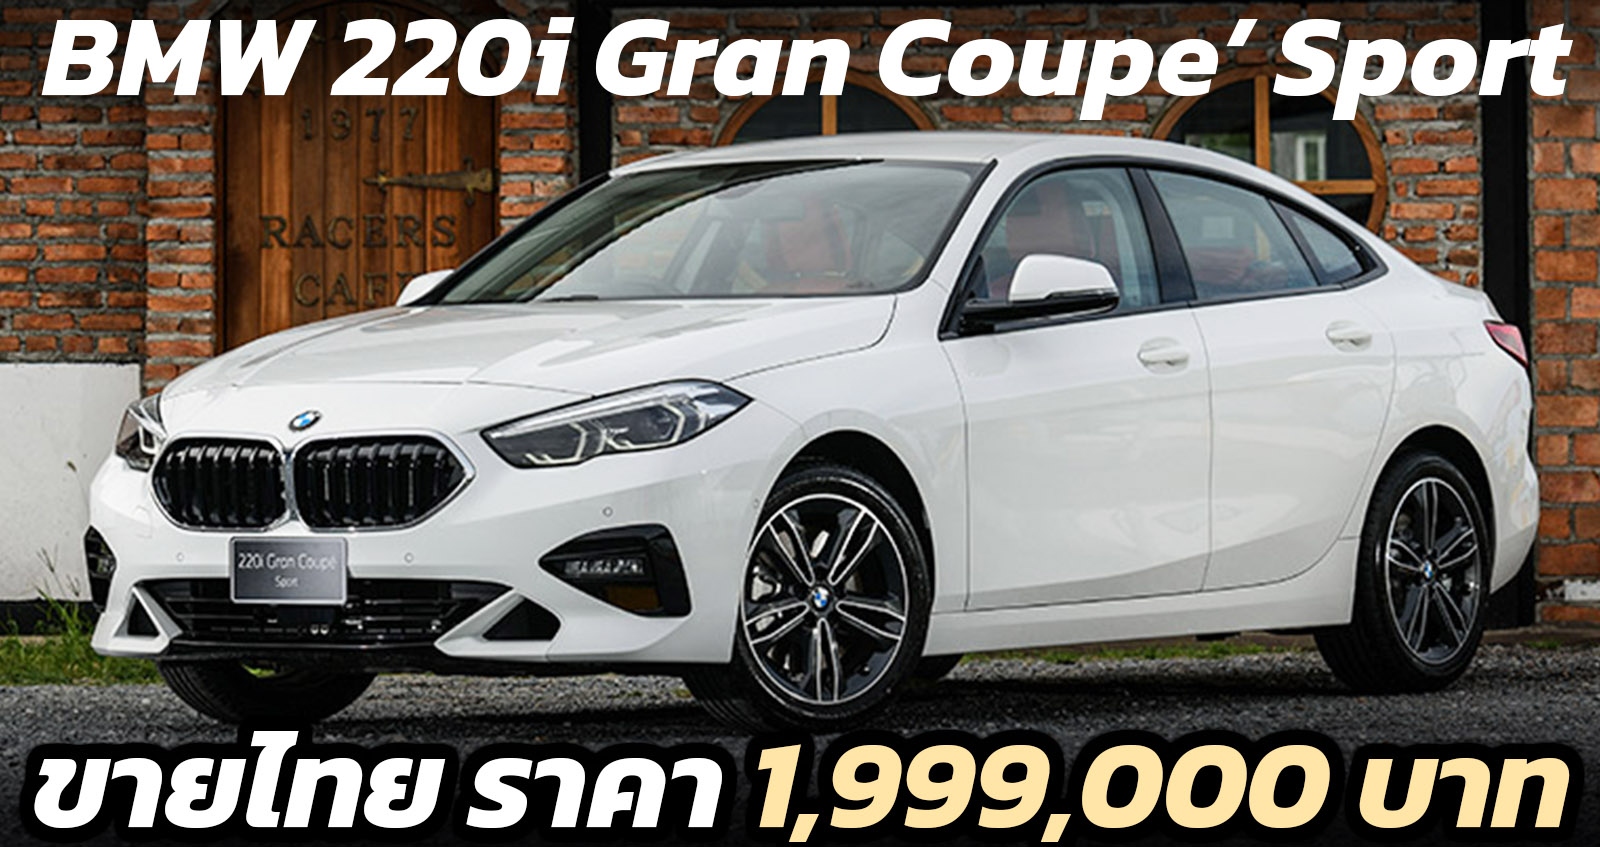 BMW 220i Gran Coupe’ Sport ขายไทย ราคา 1,999,000 บาท ประกอบไทย